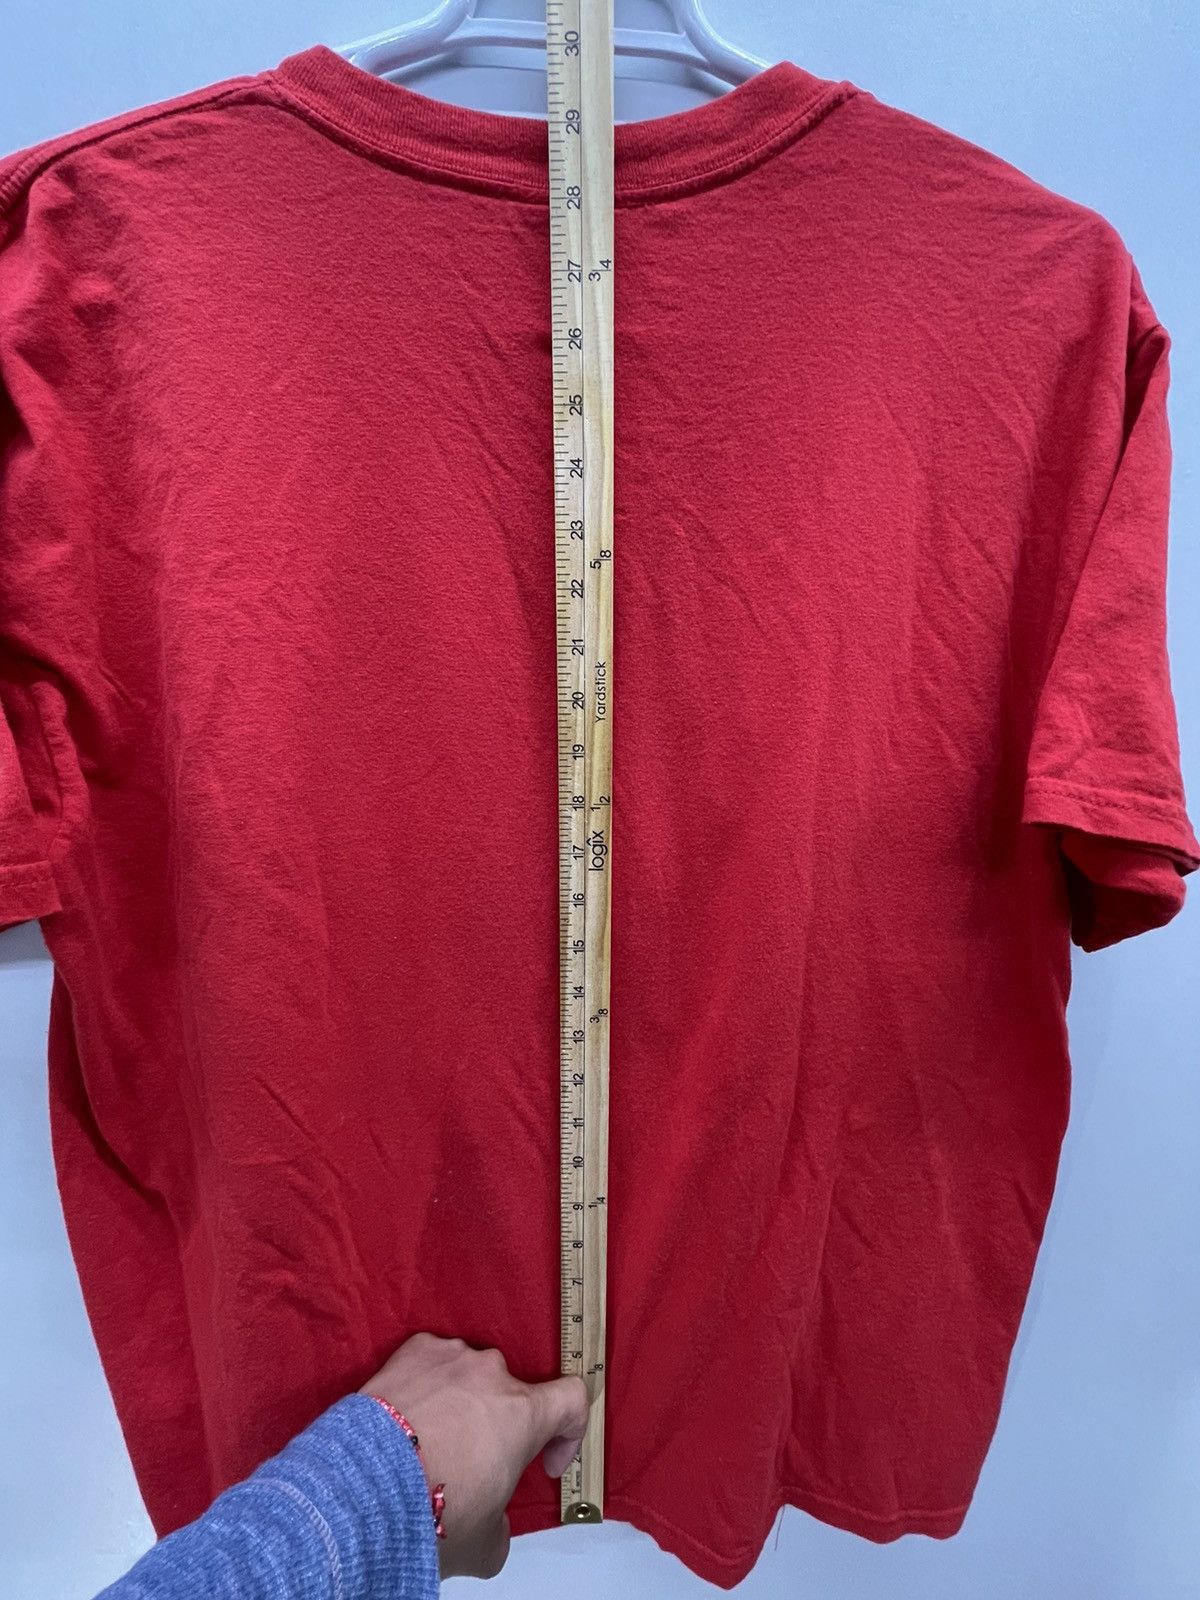 Vintage VTG m&ms graphic shirt size L Size US XL / EU 56 / 4 - 4 Thumbnail